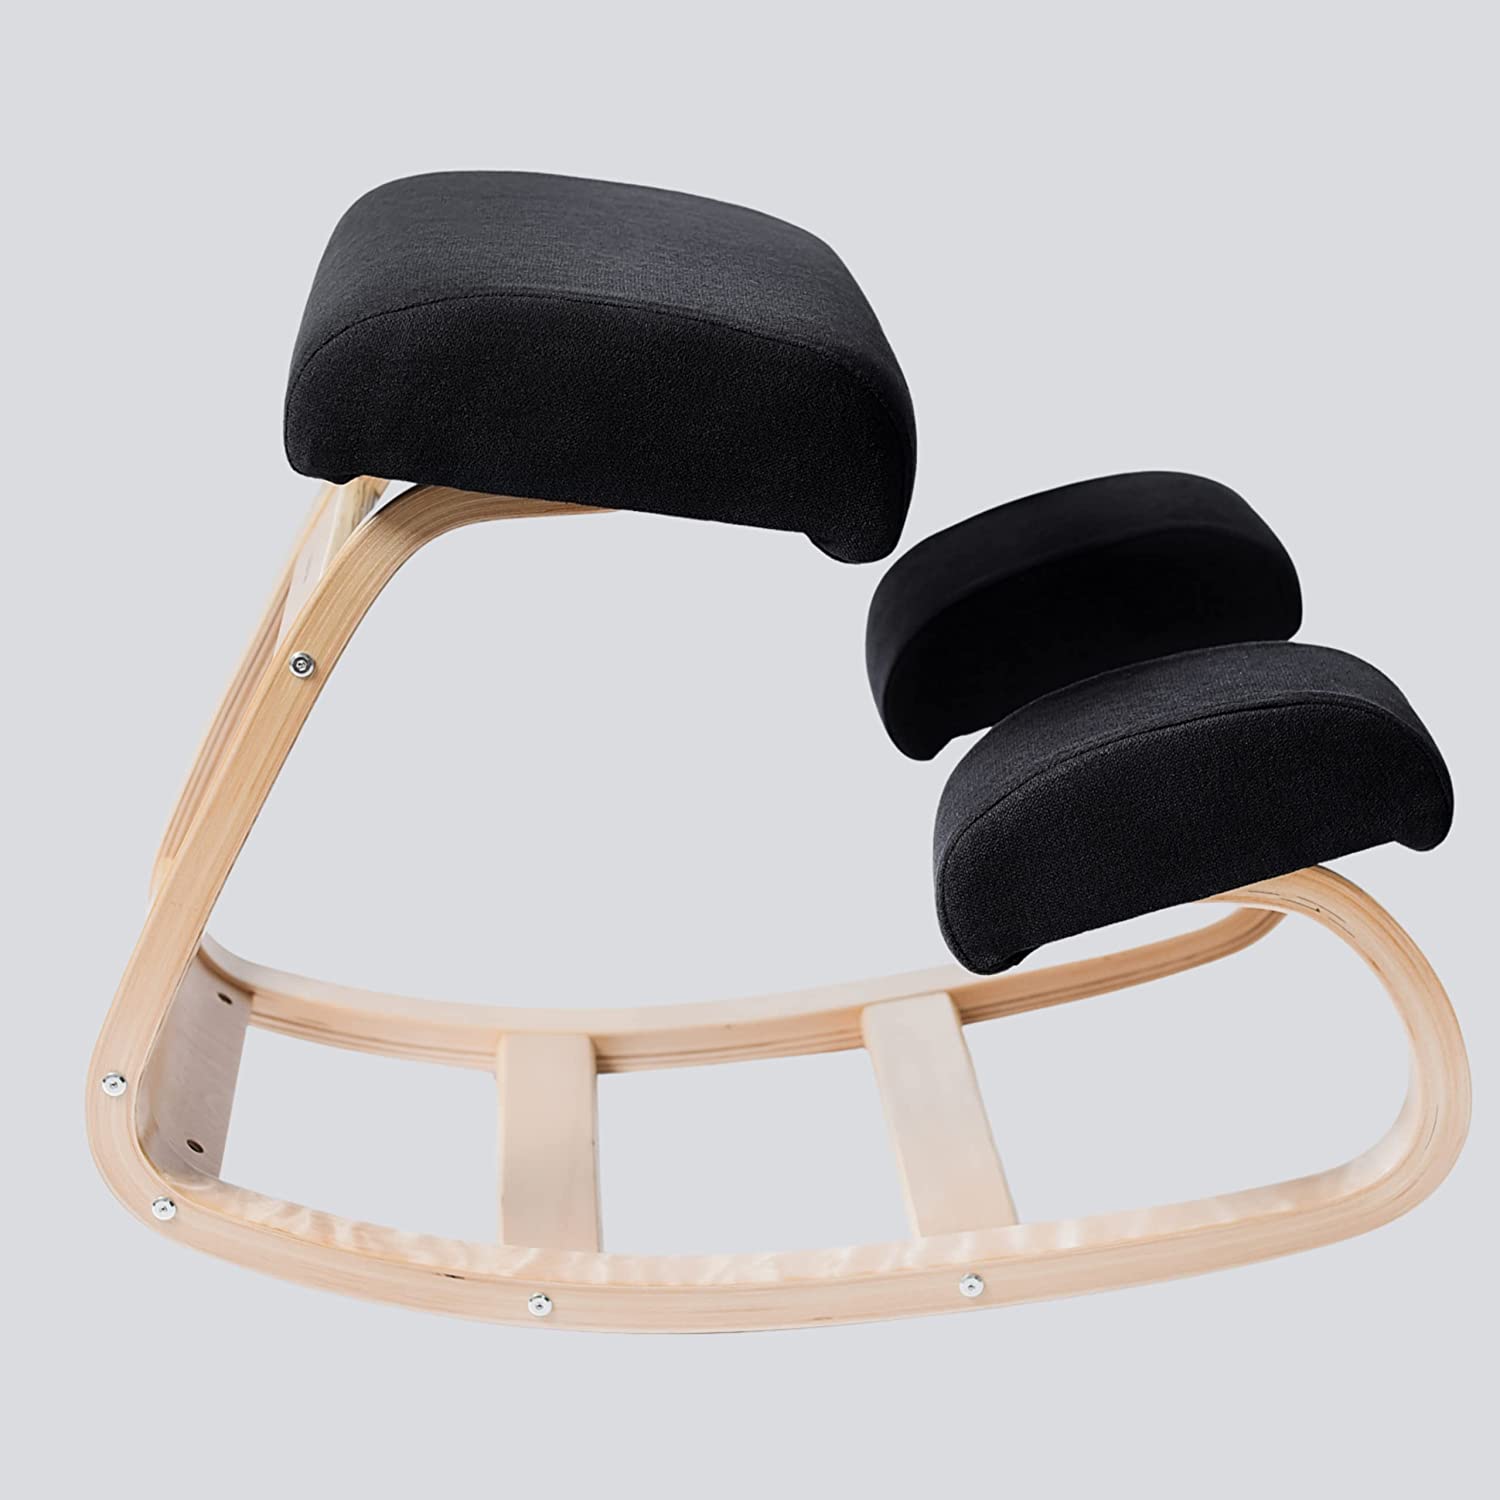 https://www.wellandgood.com/wp-content/uploads/2021/12/sleekform-kneeling-chair.jpg